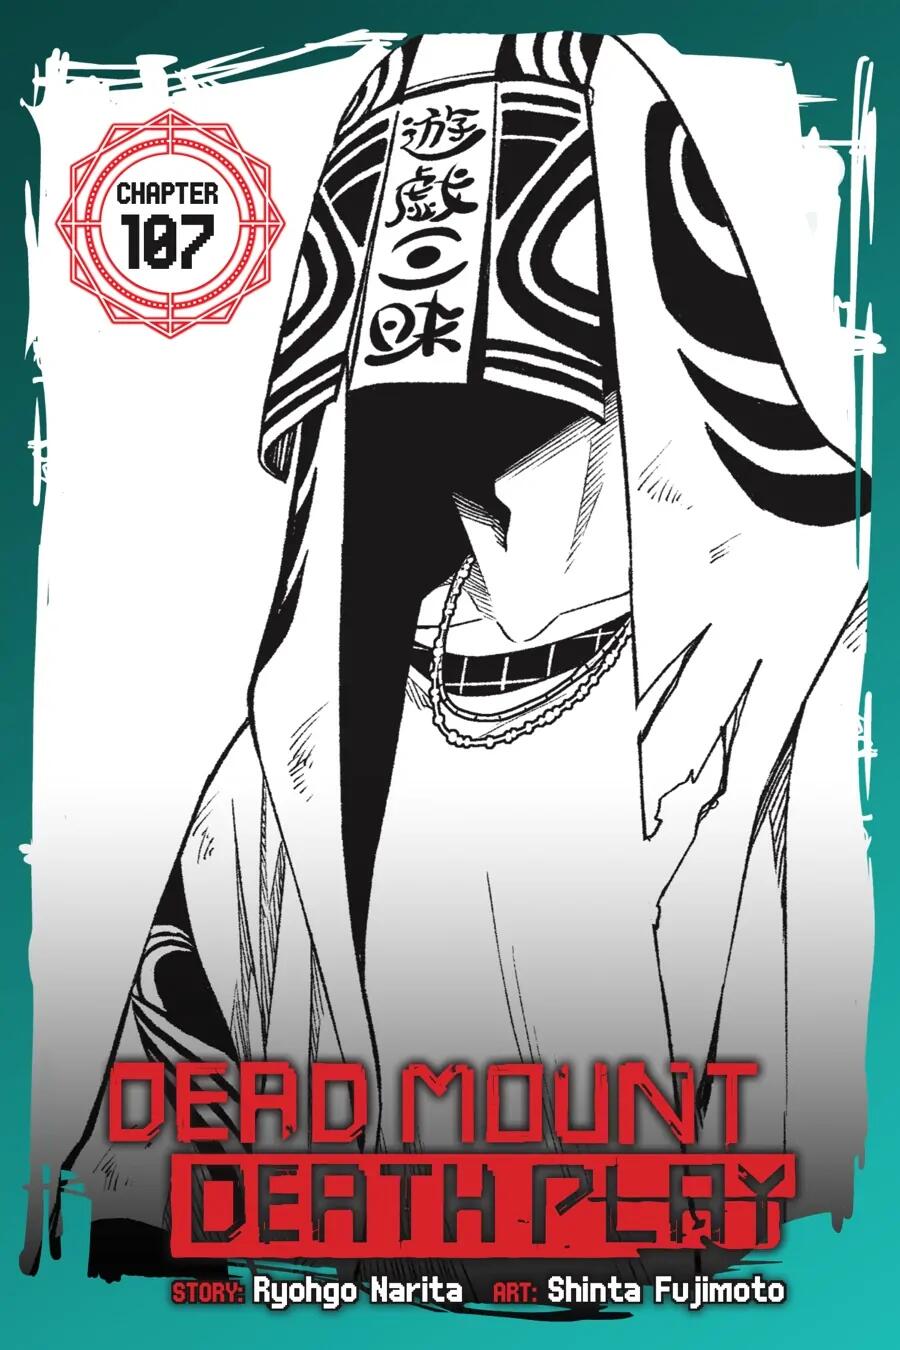 Dead Mount Death Play, Chapter 104 - Dead Mount Death Play Manga